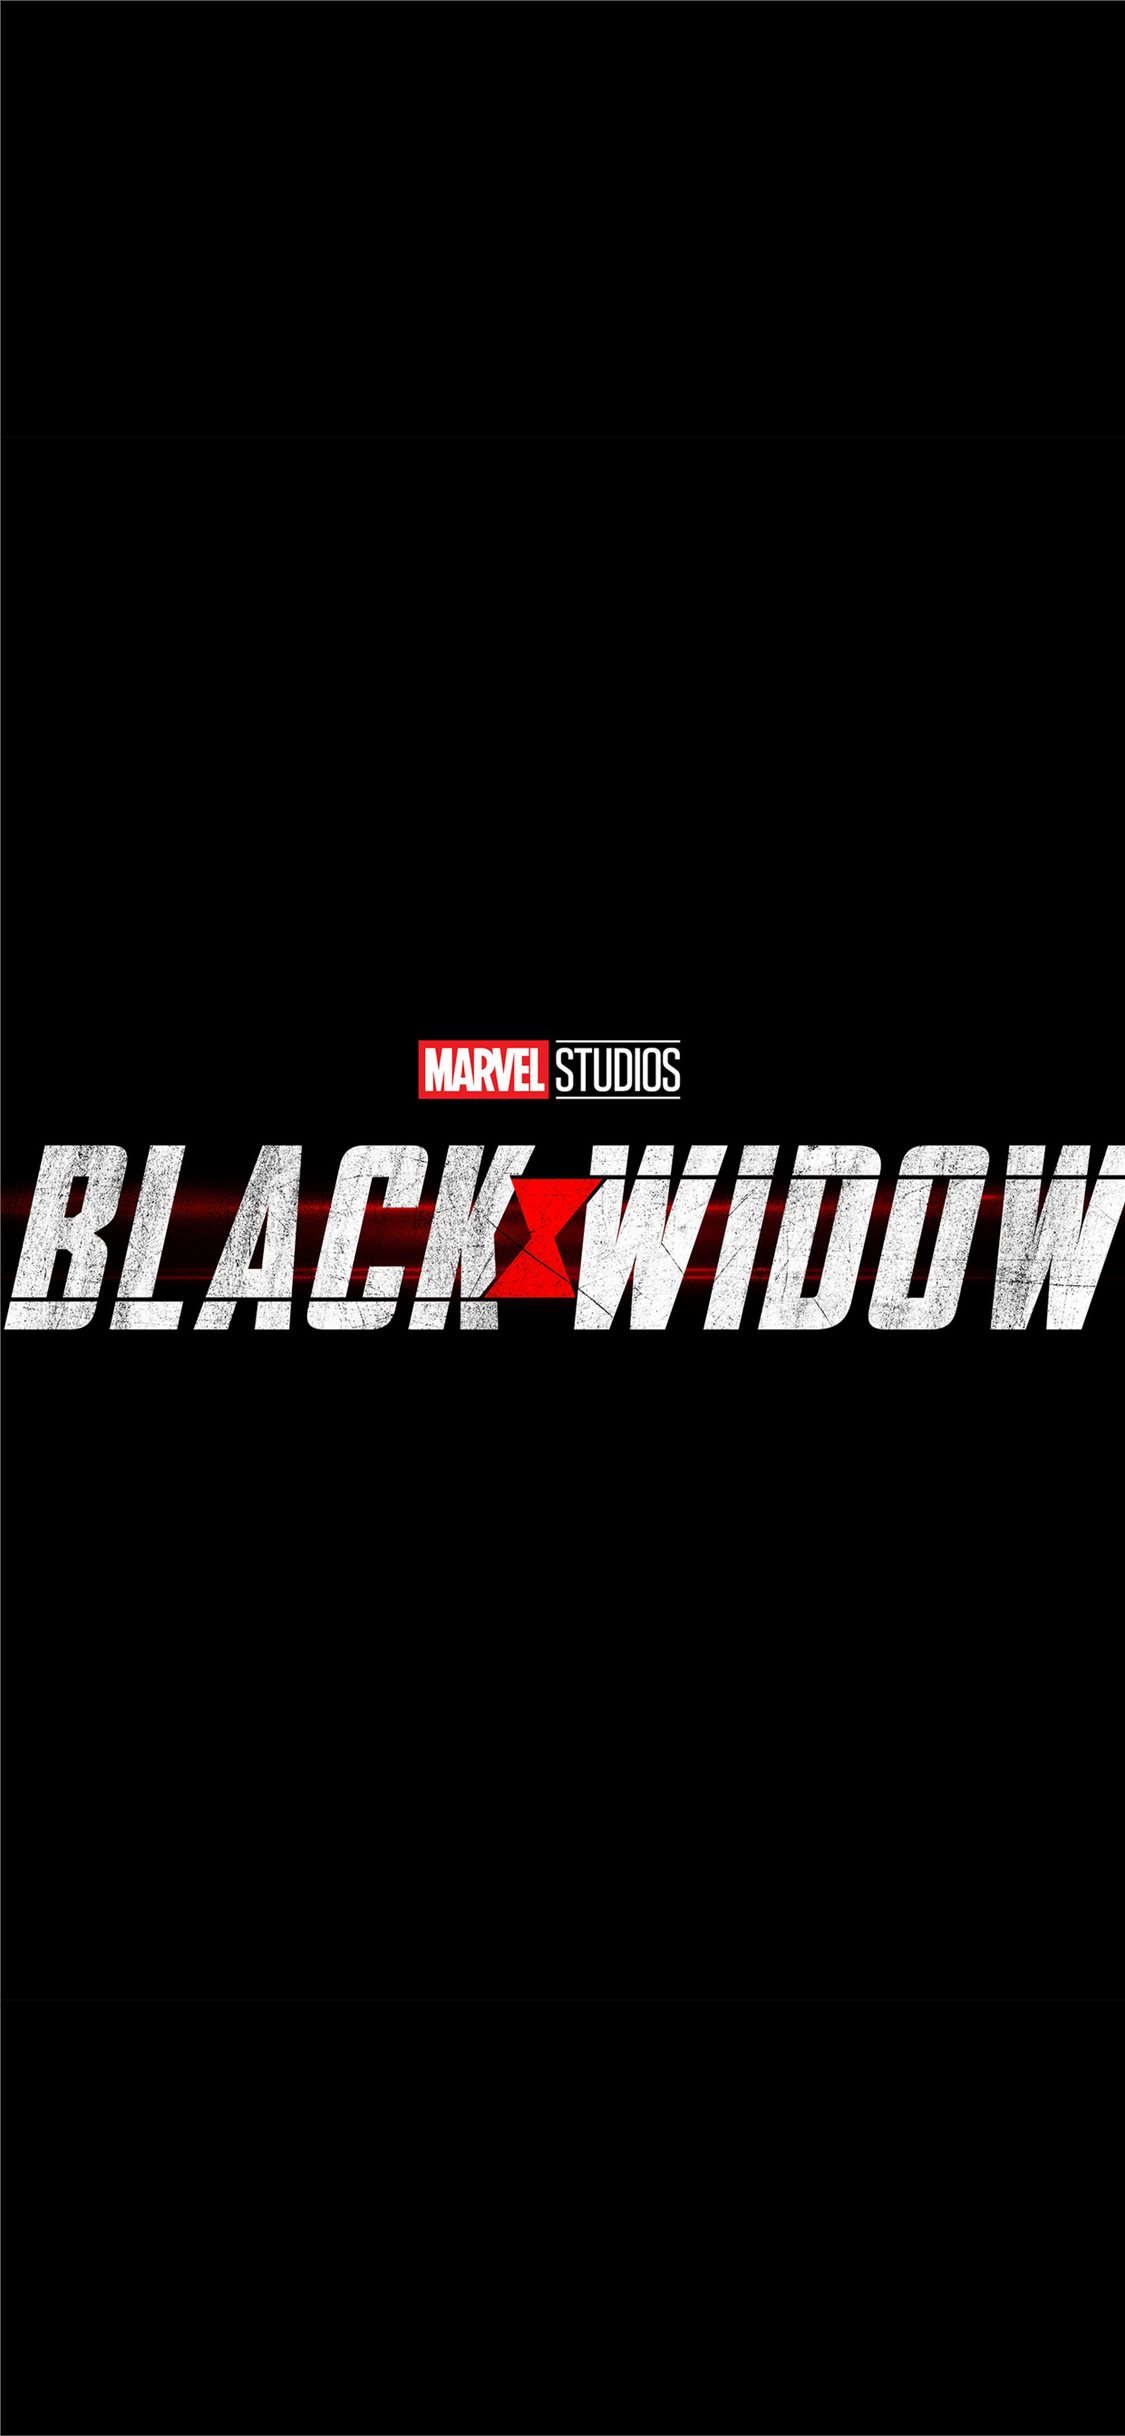 black widow 2020 movie iPhone X Wallpapers Download 1125x2436